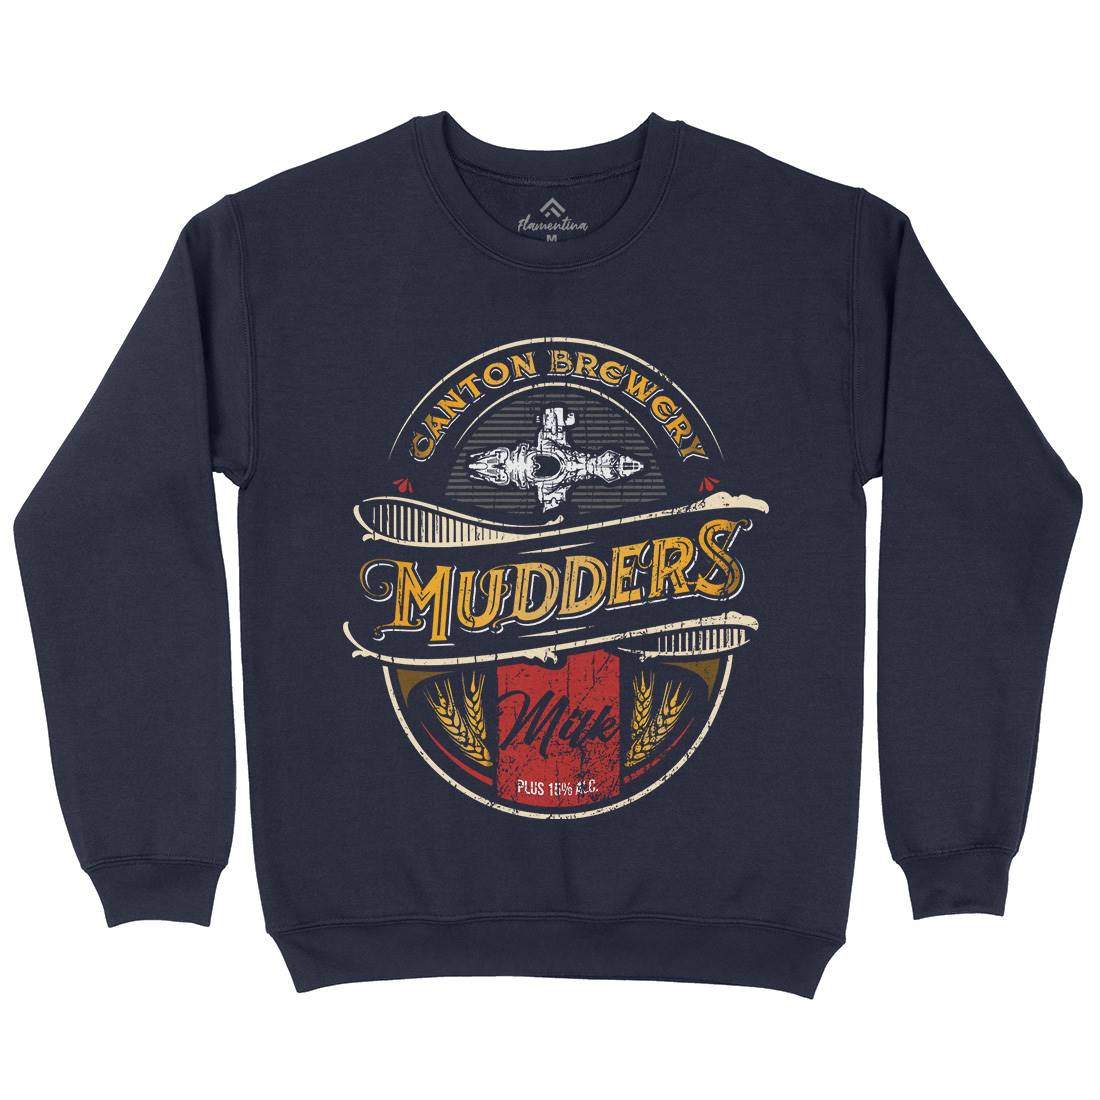 Mudders Milk Kids Crew Neck Sweatshirt Space D174